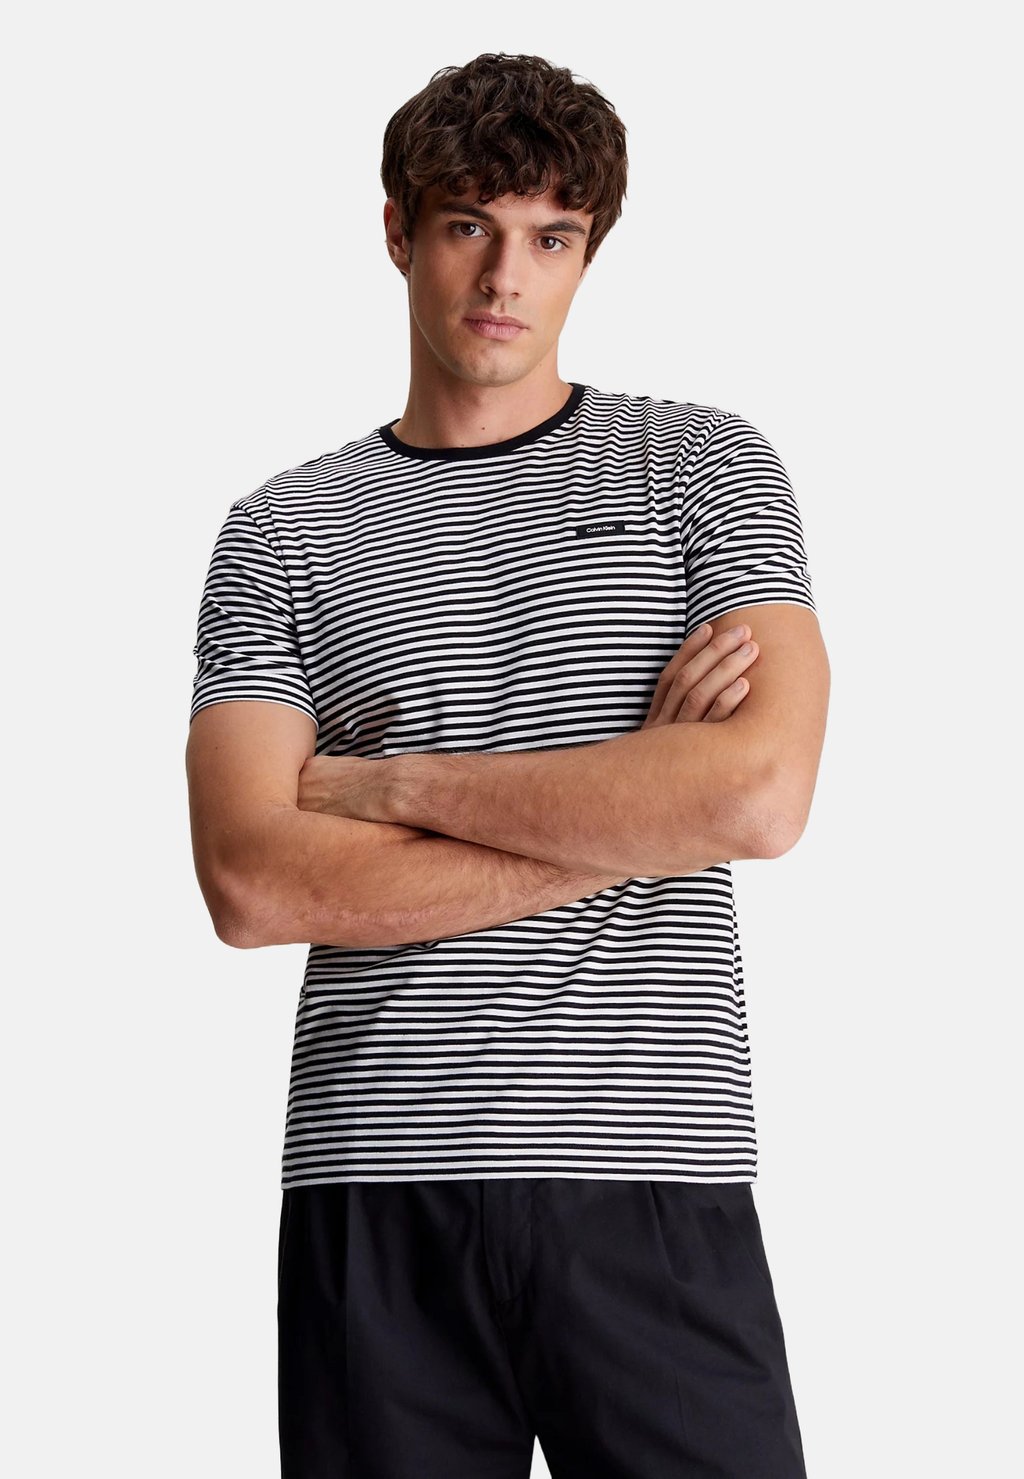 Футболка с принтом STRIPE Calvin Klein, цвет black white stripes топ с длинными рукавами nmmalina stripe top noisy may цвет black stripes white stripes